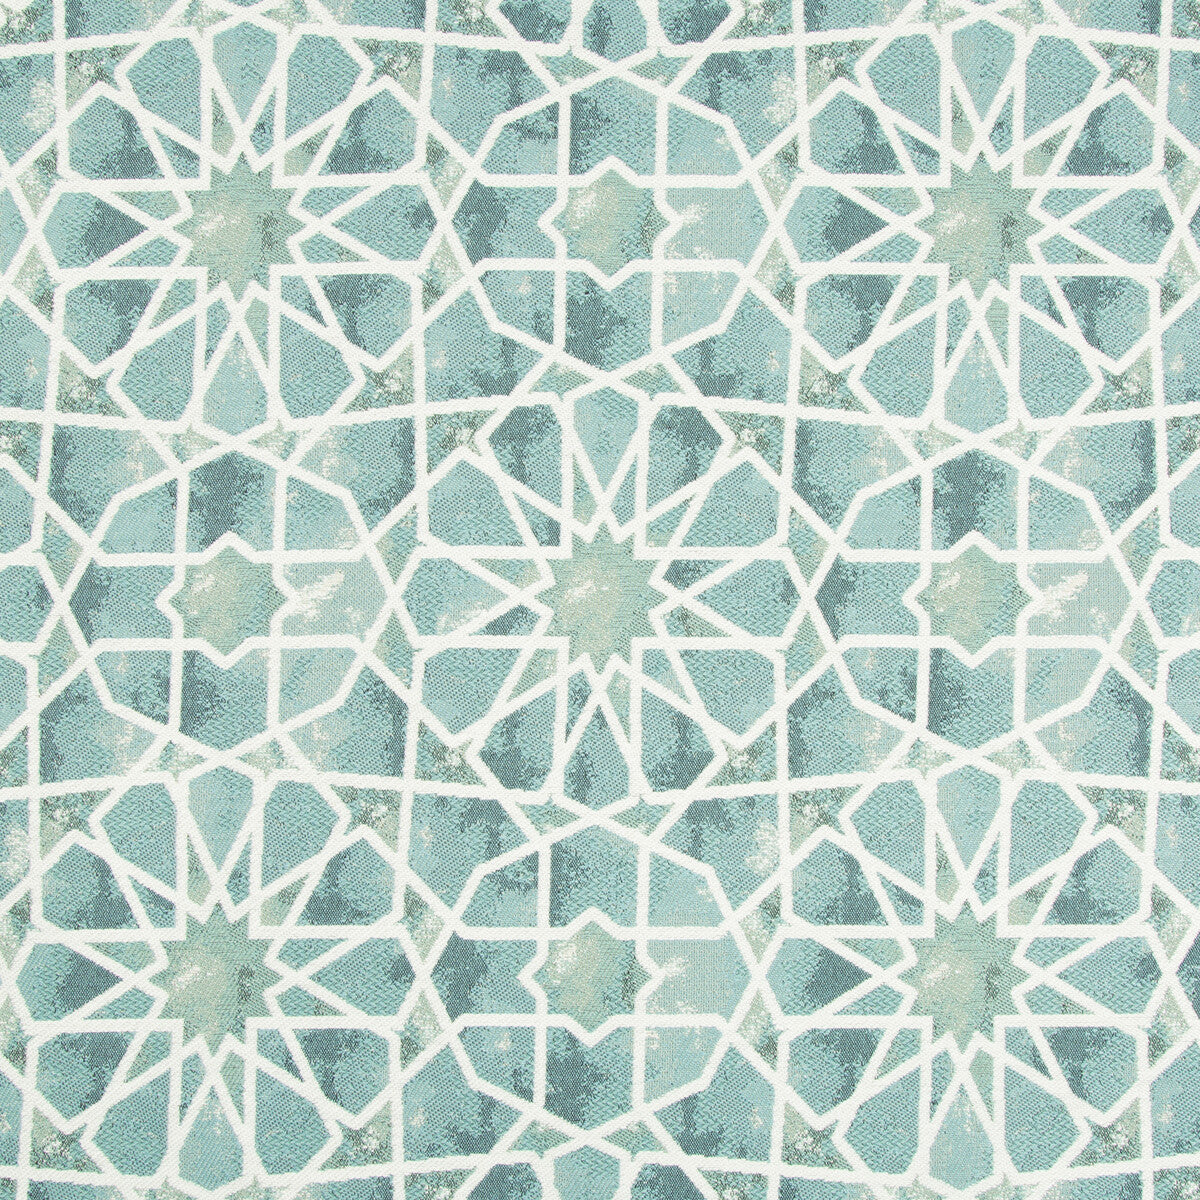 Kravet Design fabric in 34722-35 color - pattern 34722.35.0 - by Kravet Design in the Gis collection